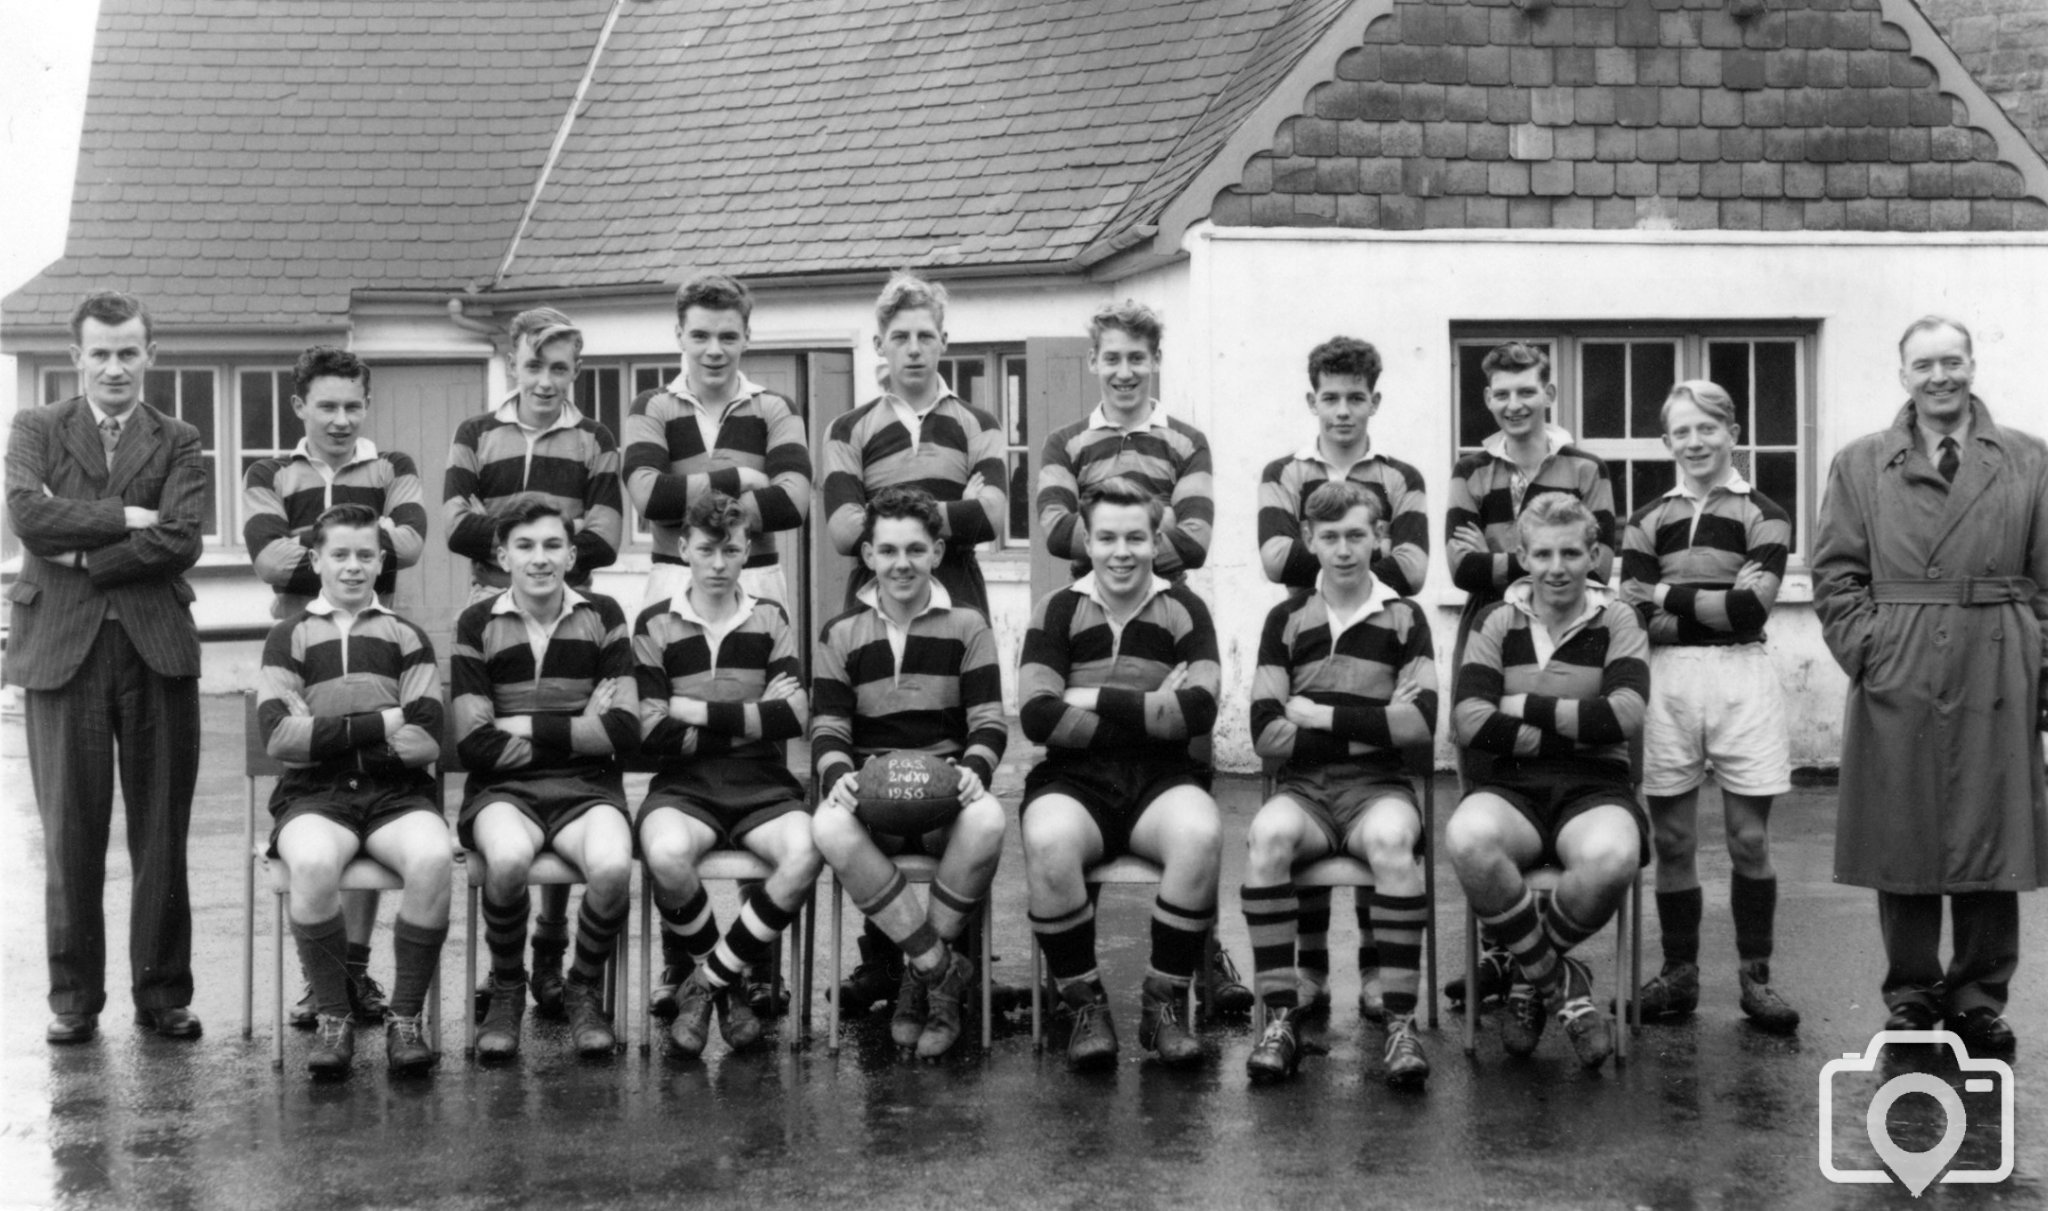 Rugby 2nd Team 1956